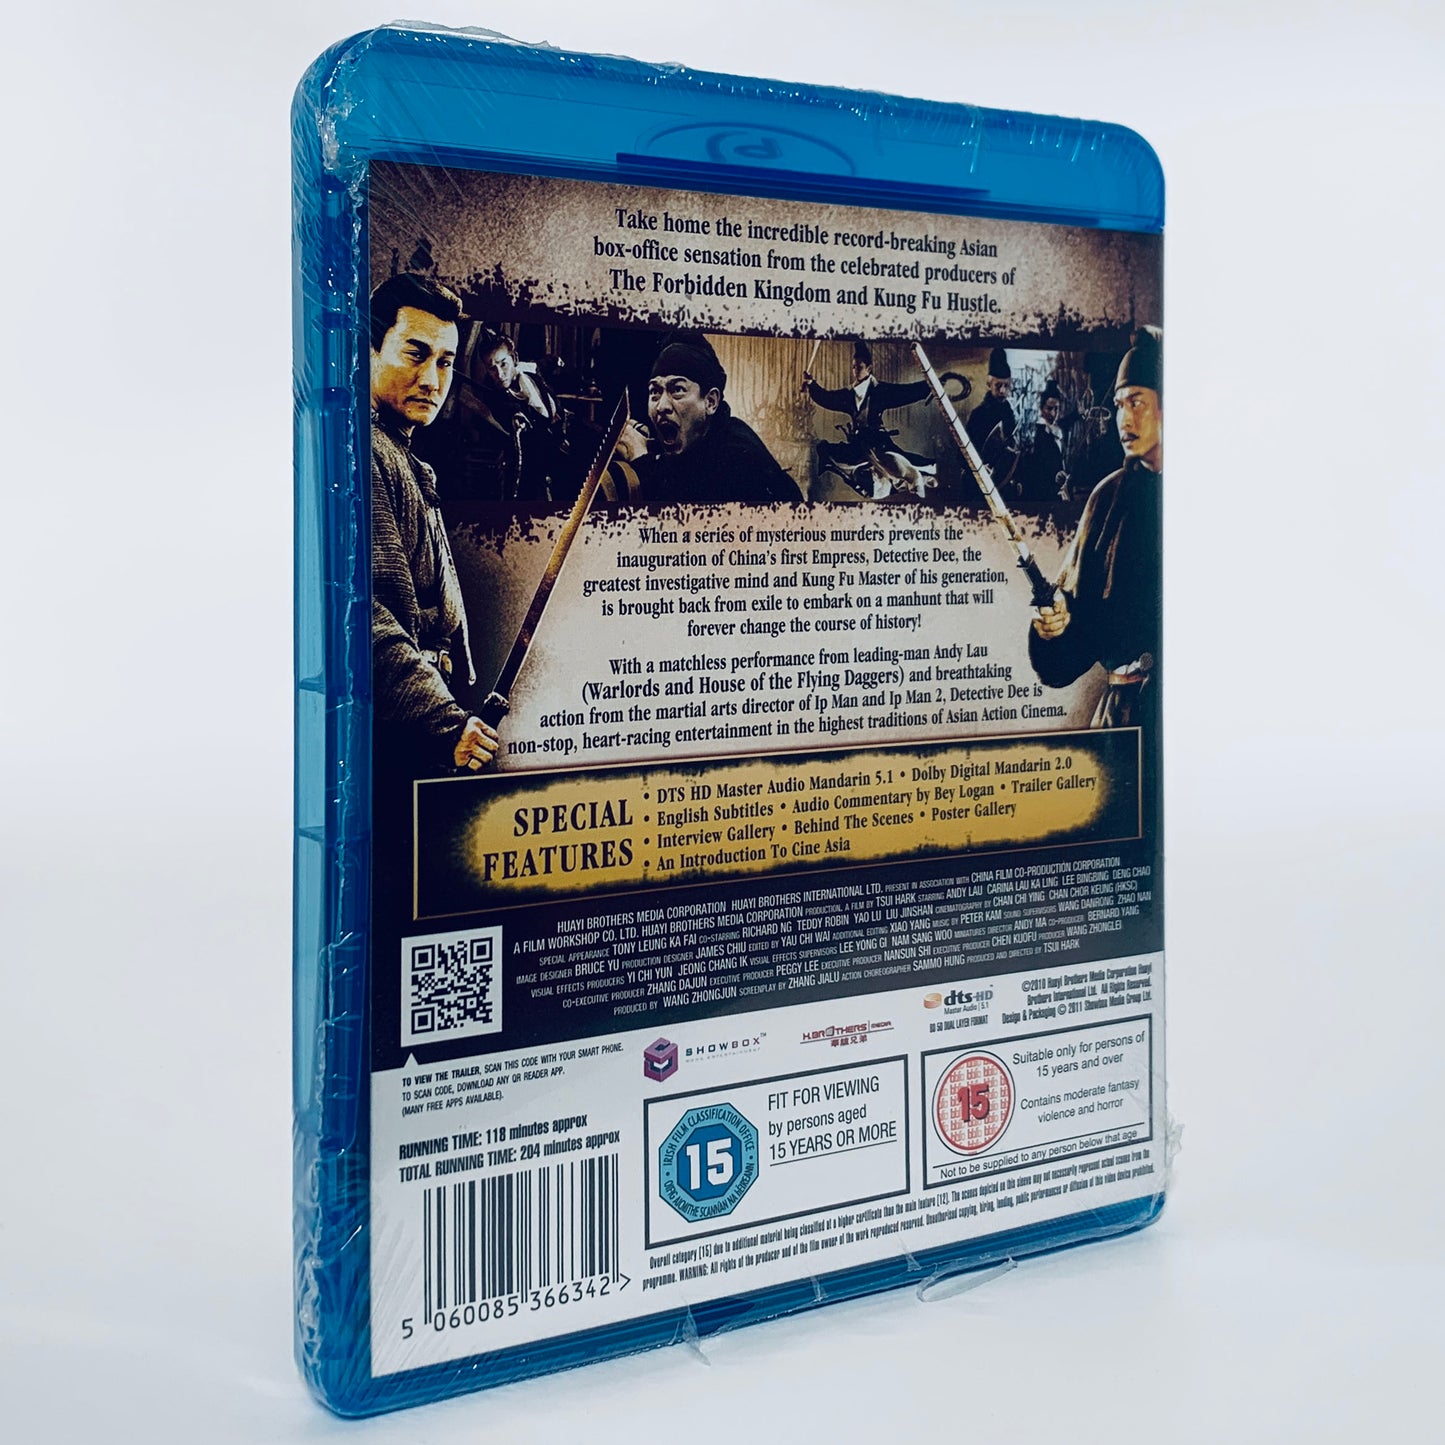 Detective Dee and the Mystery of the Phantom Flame Tsui Hark Andy Lau Region B Blu-ray Cine Asia UK